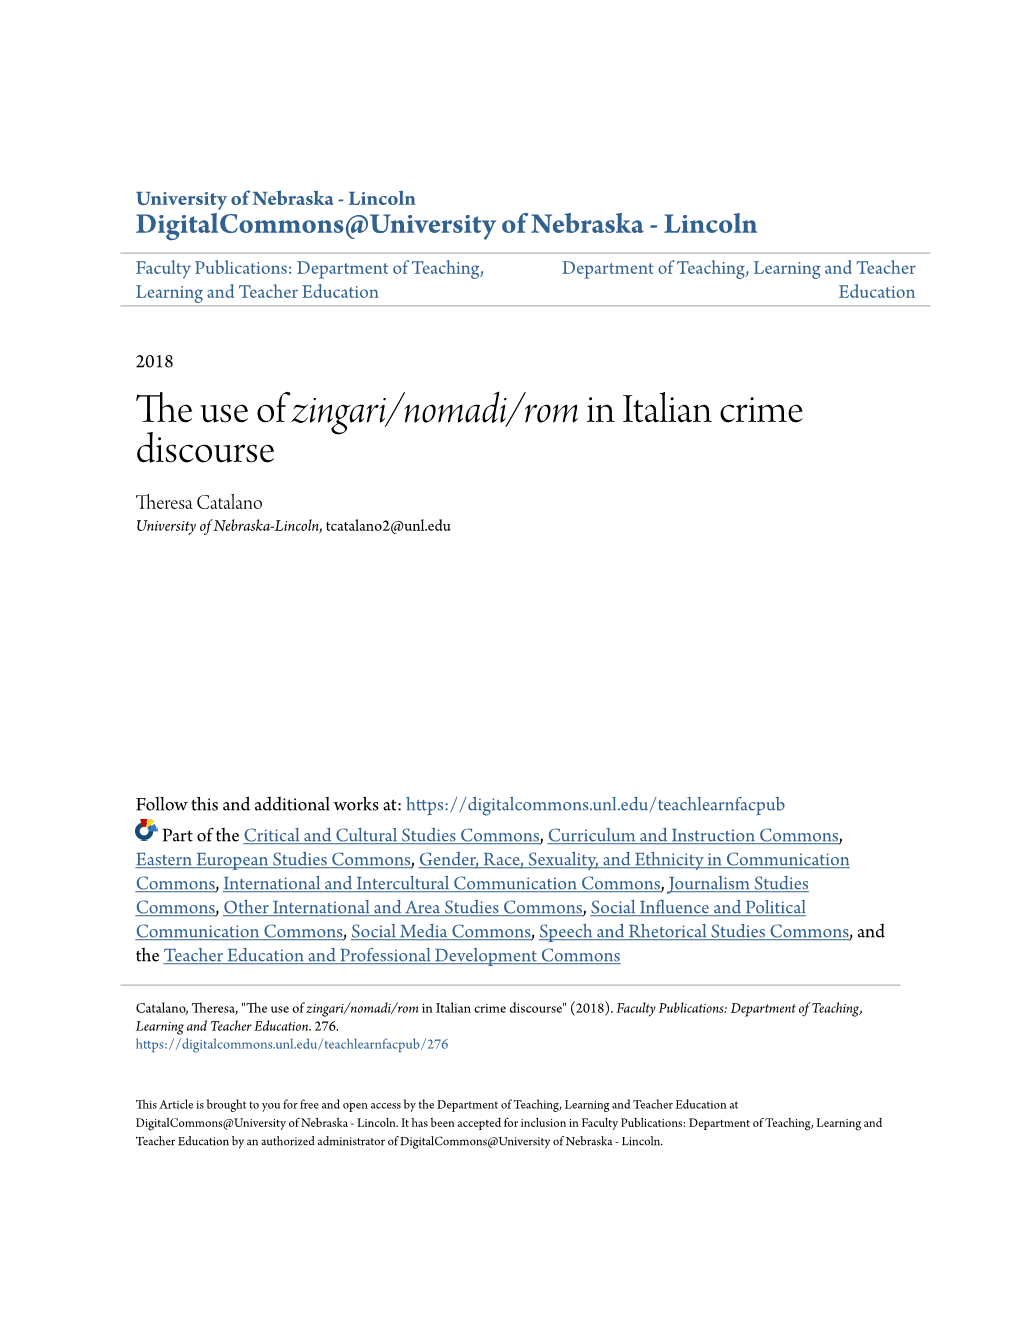 The Use of &lt;I&gt;Zingari/Nomadi/Rom&lt;/I&gt; in Italian Crime Discourse